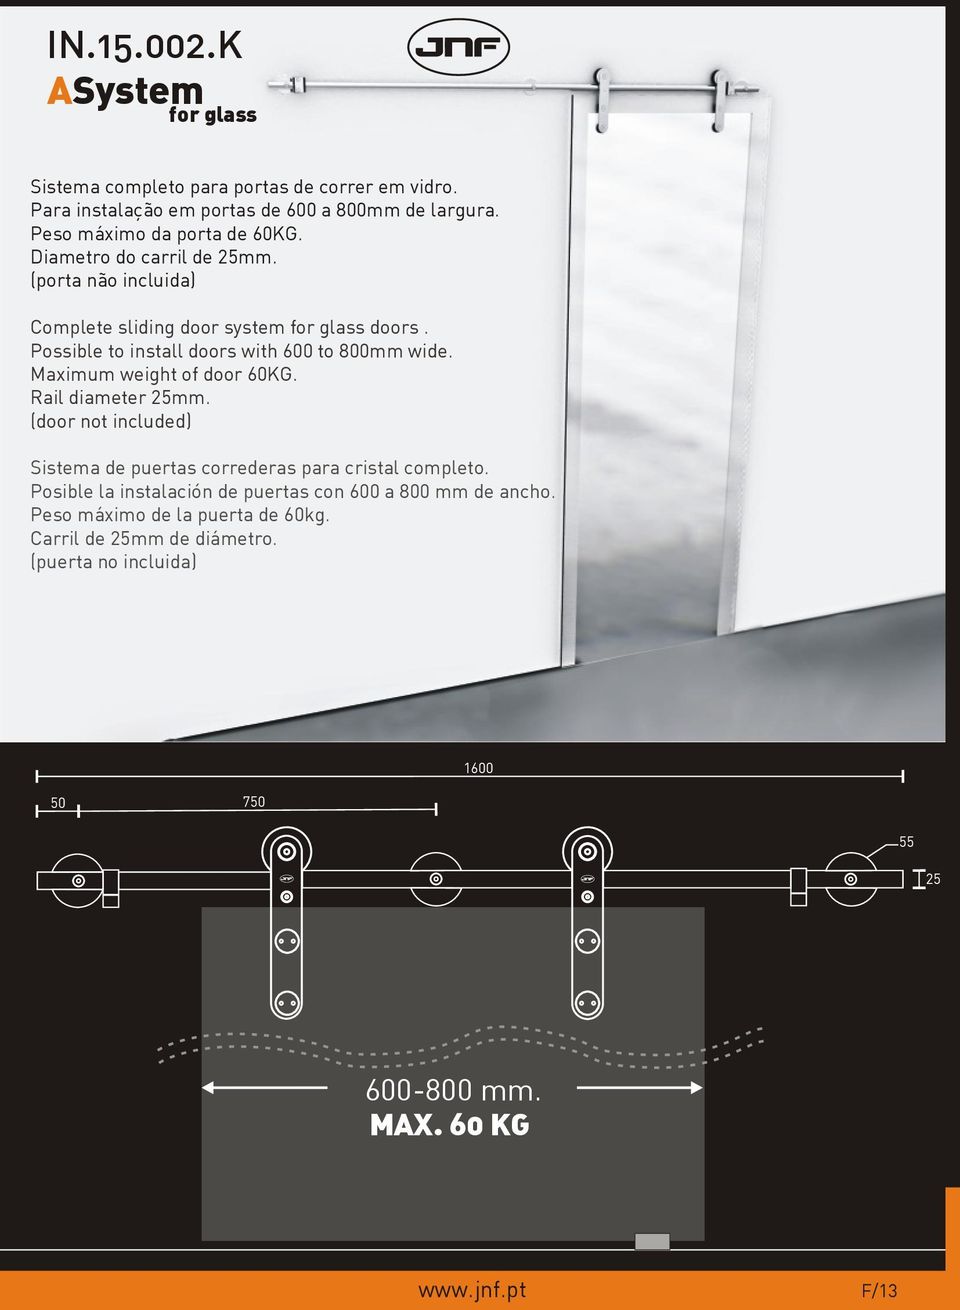 Possible to install doors with 600 to 800mm wide. Maximum weight of door 60KG. Rail diameter 25mm.